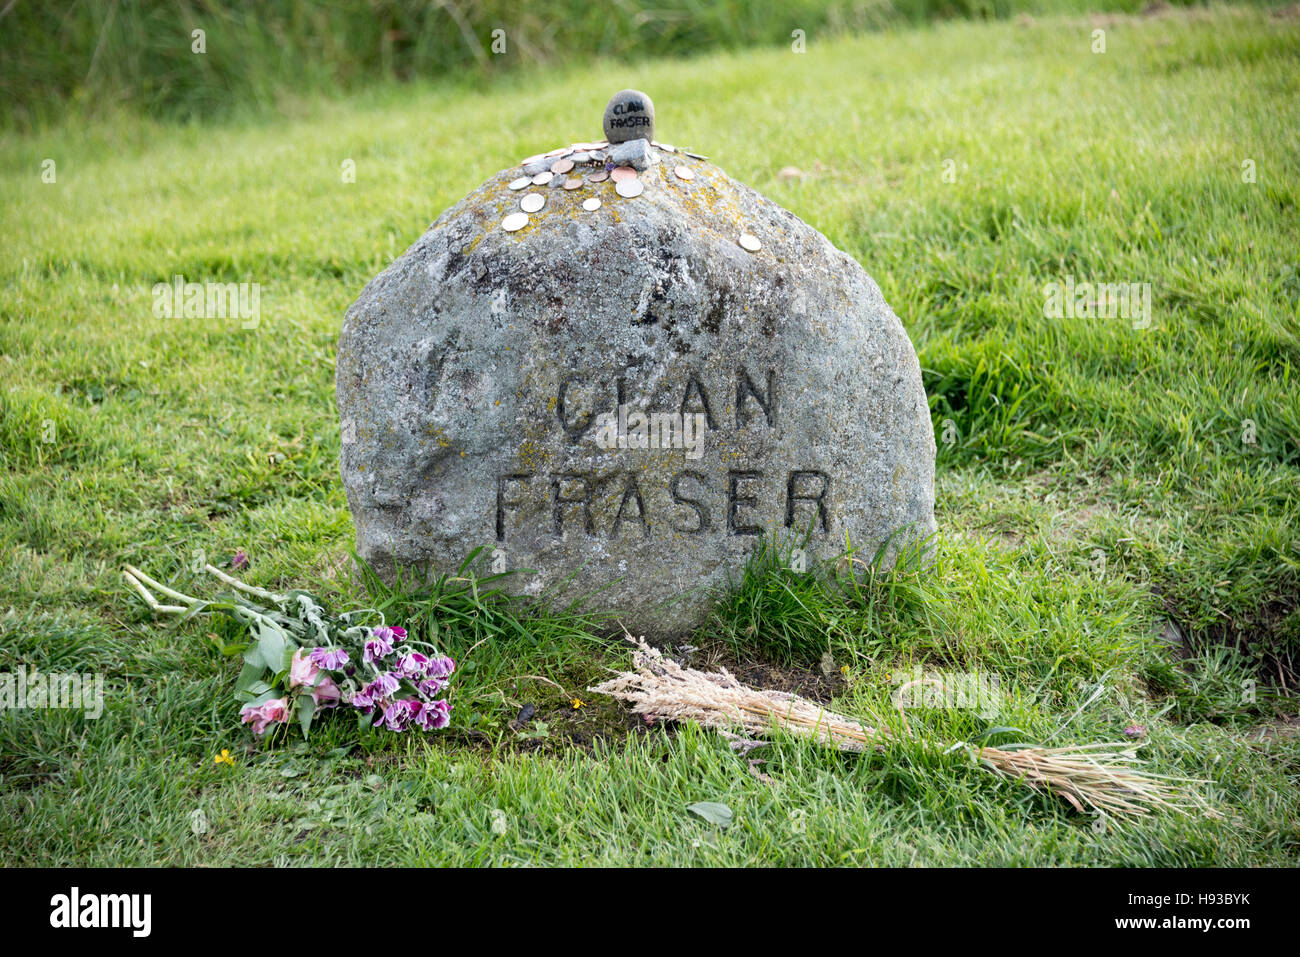 Battle of Culloden clan memorial stone marker (Clan Fraser). Stock Photo